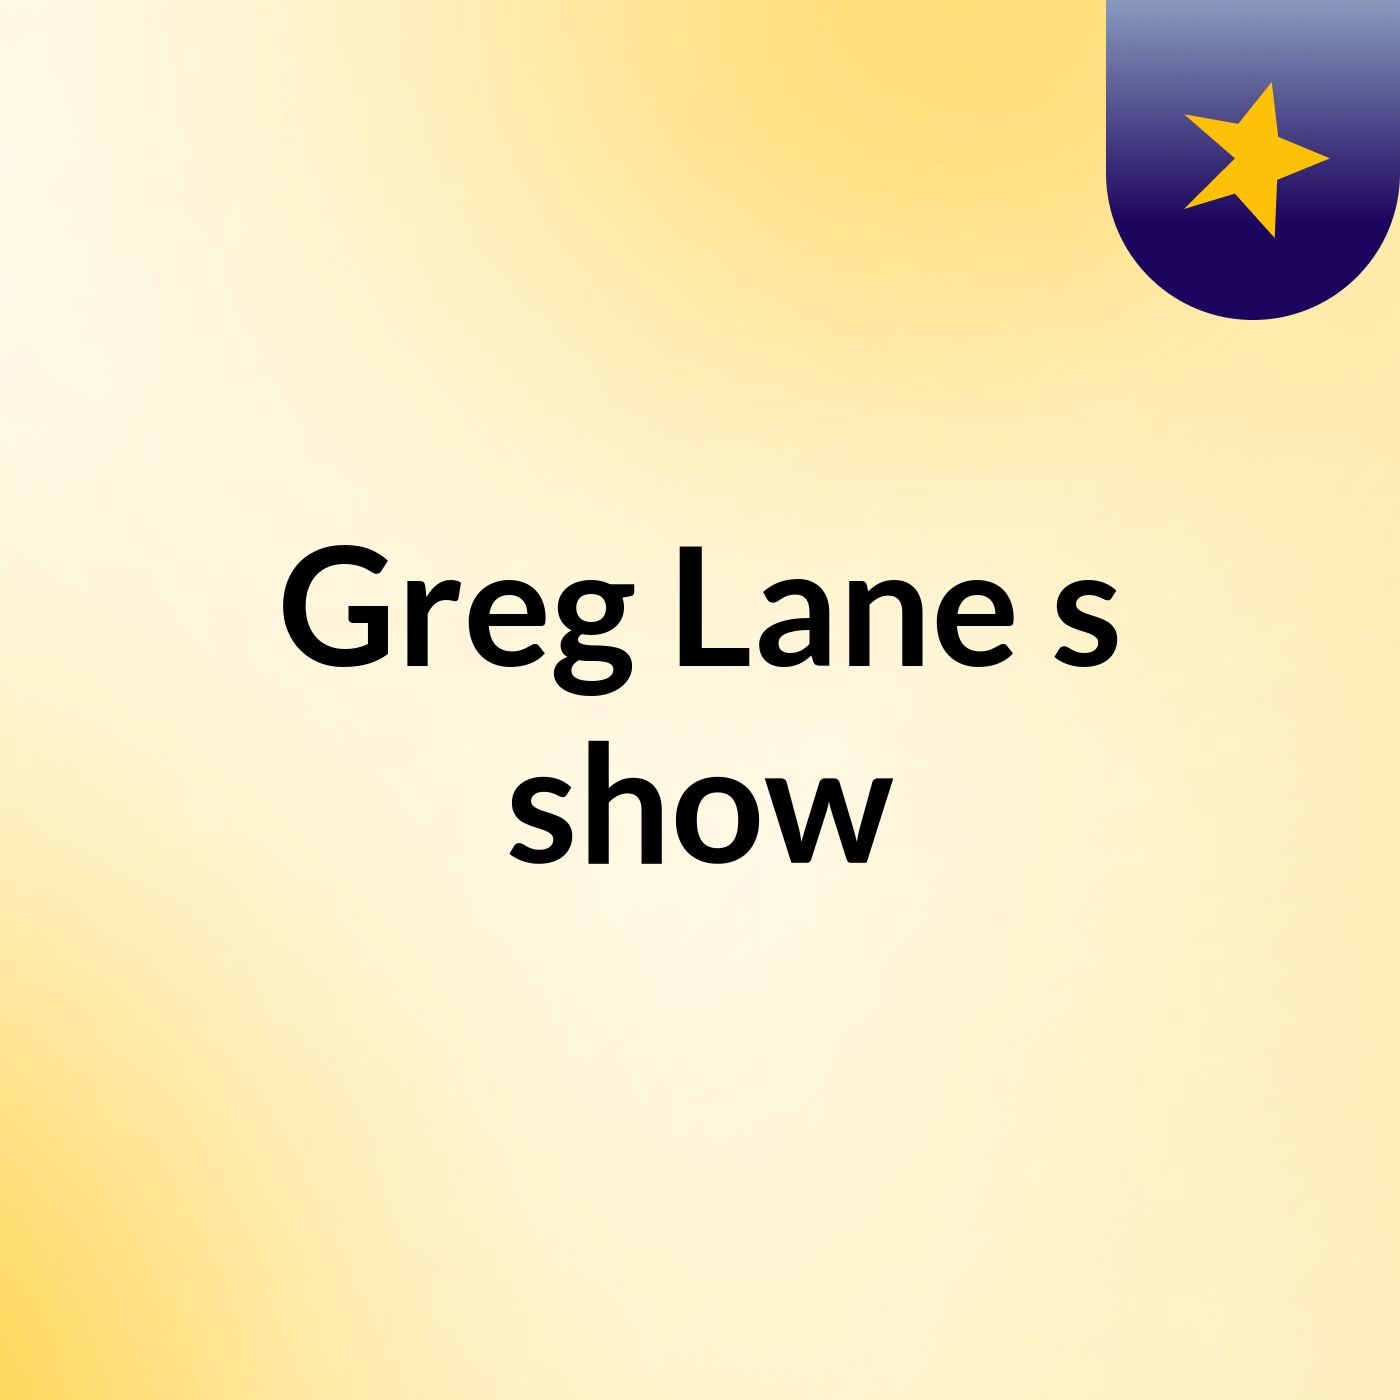 Greg Lane's show